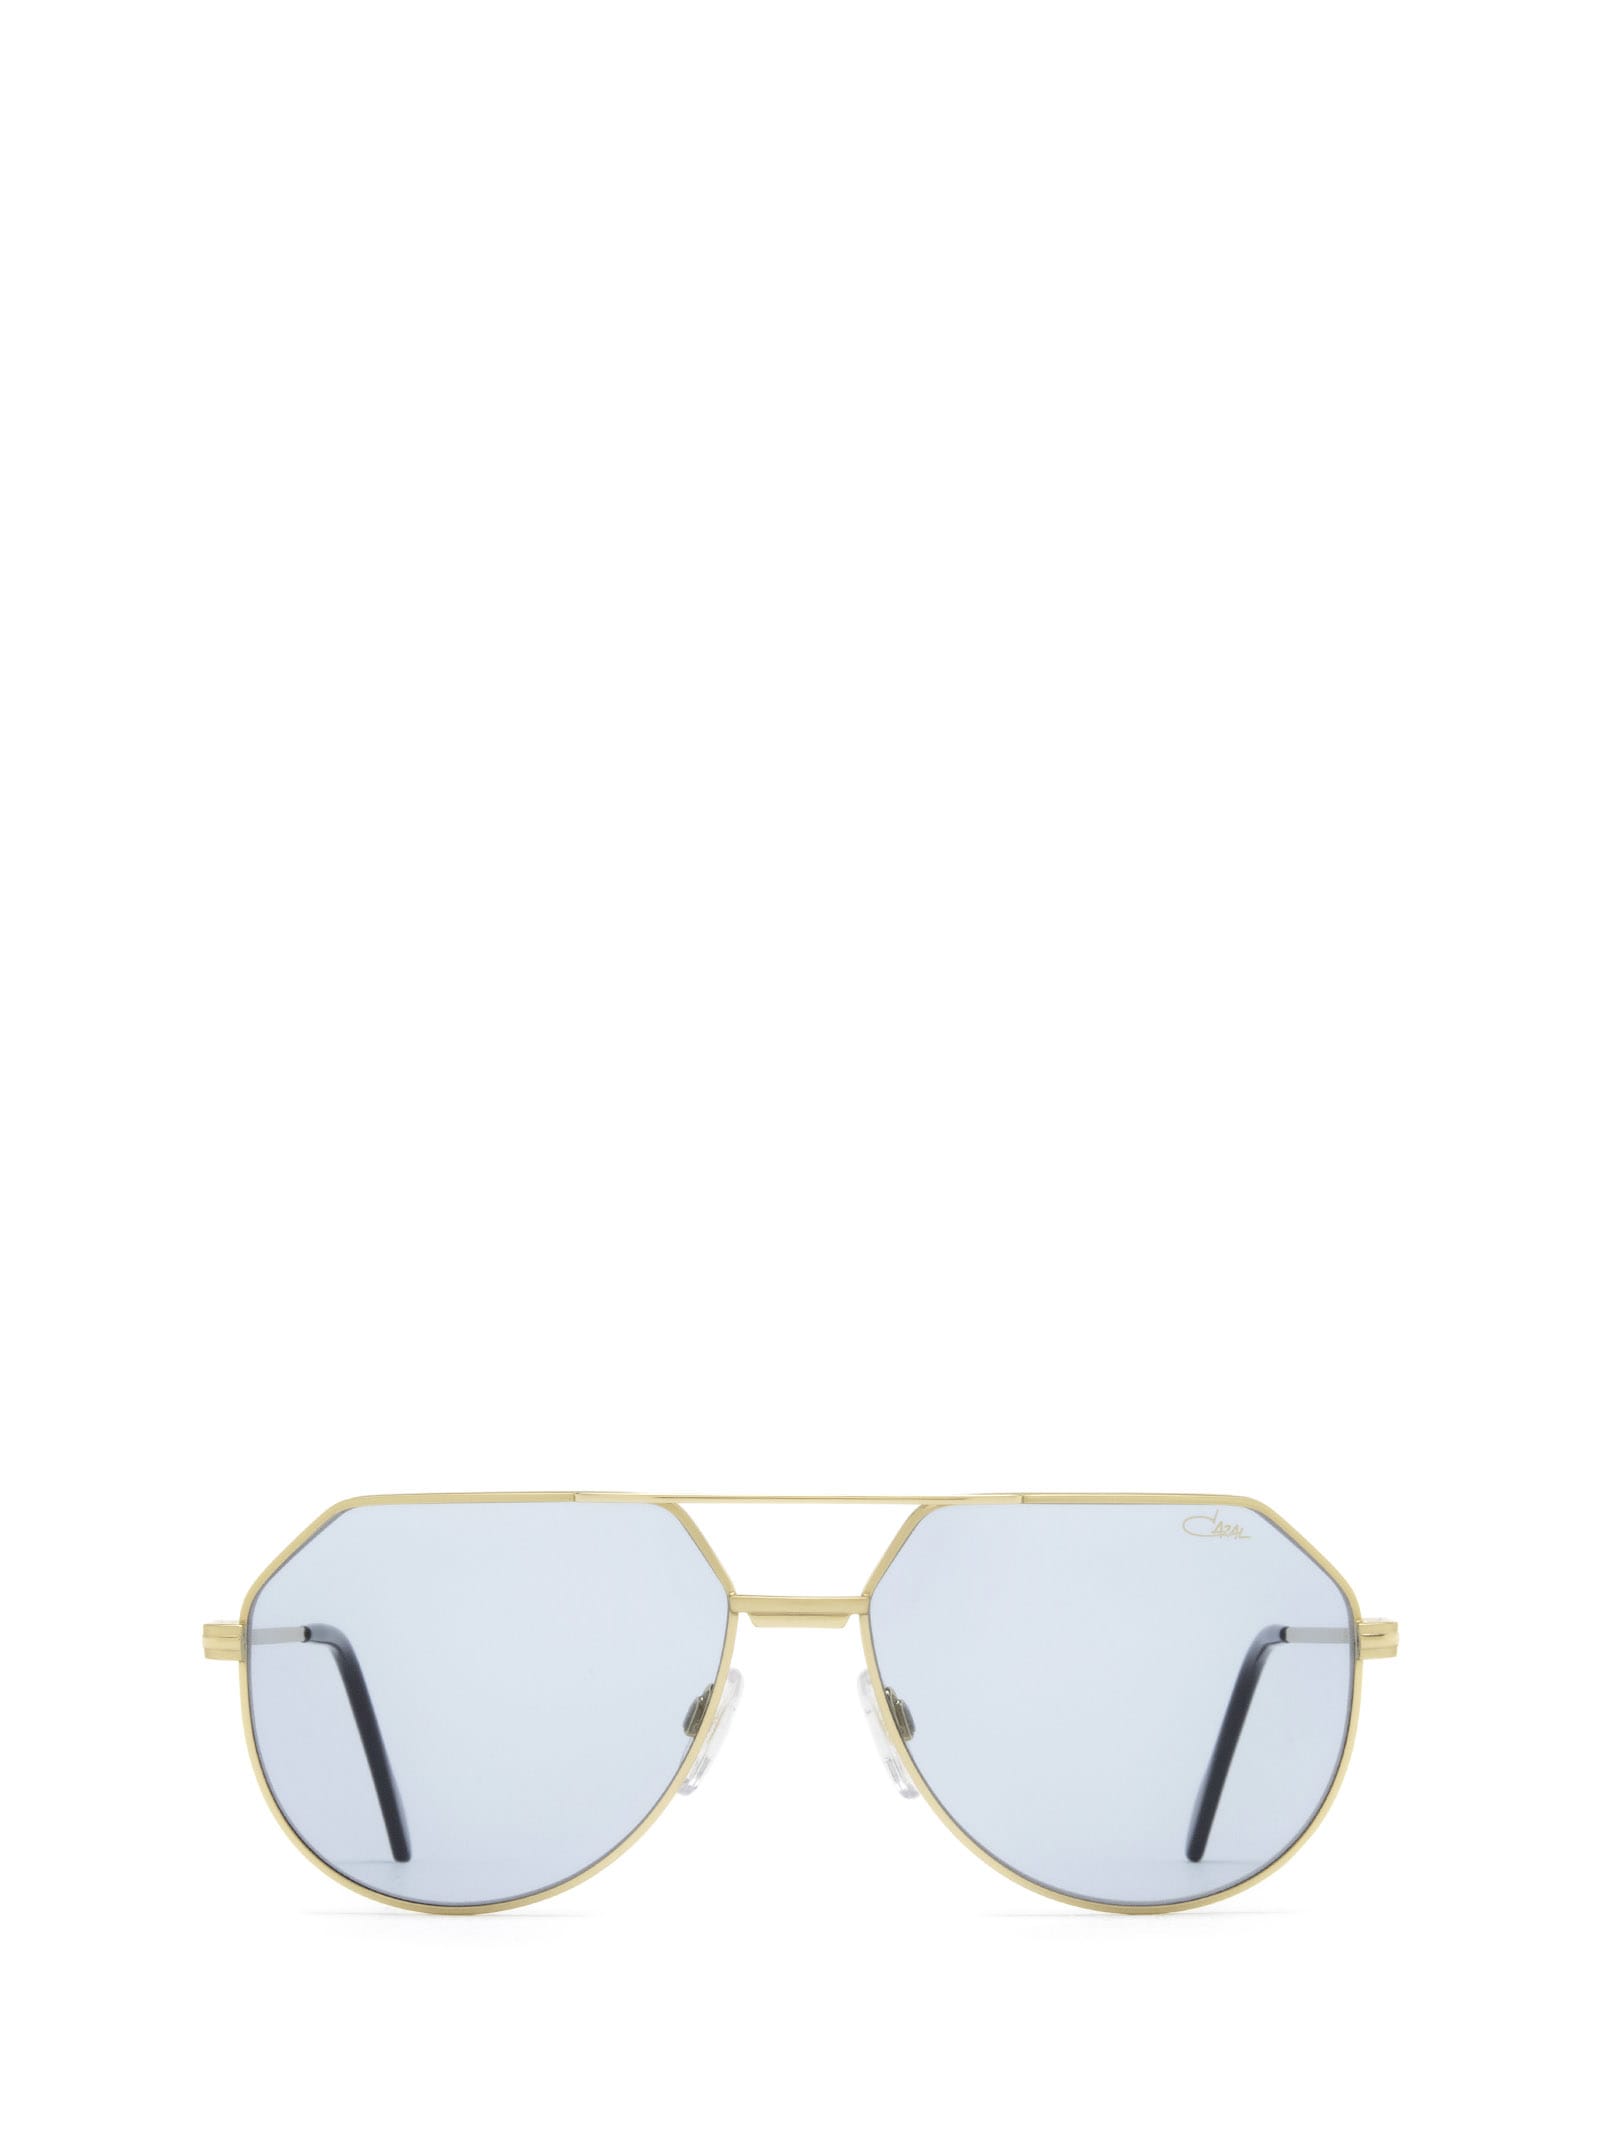 Cazal 724/3 Gold Sunglasses